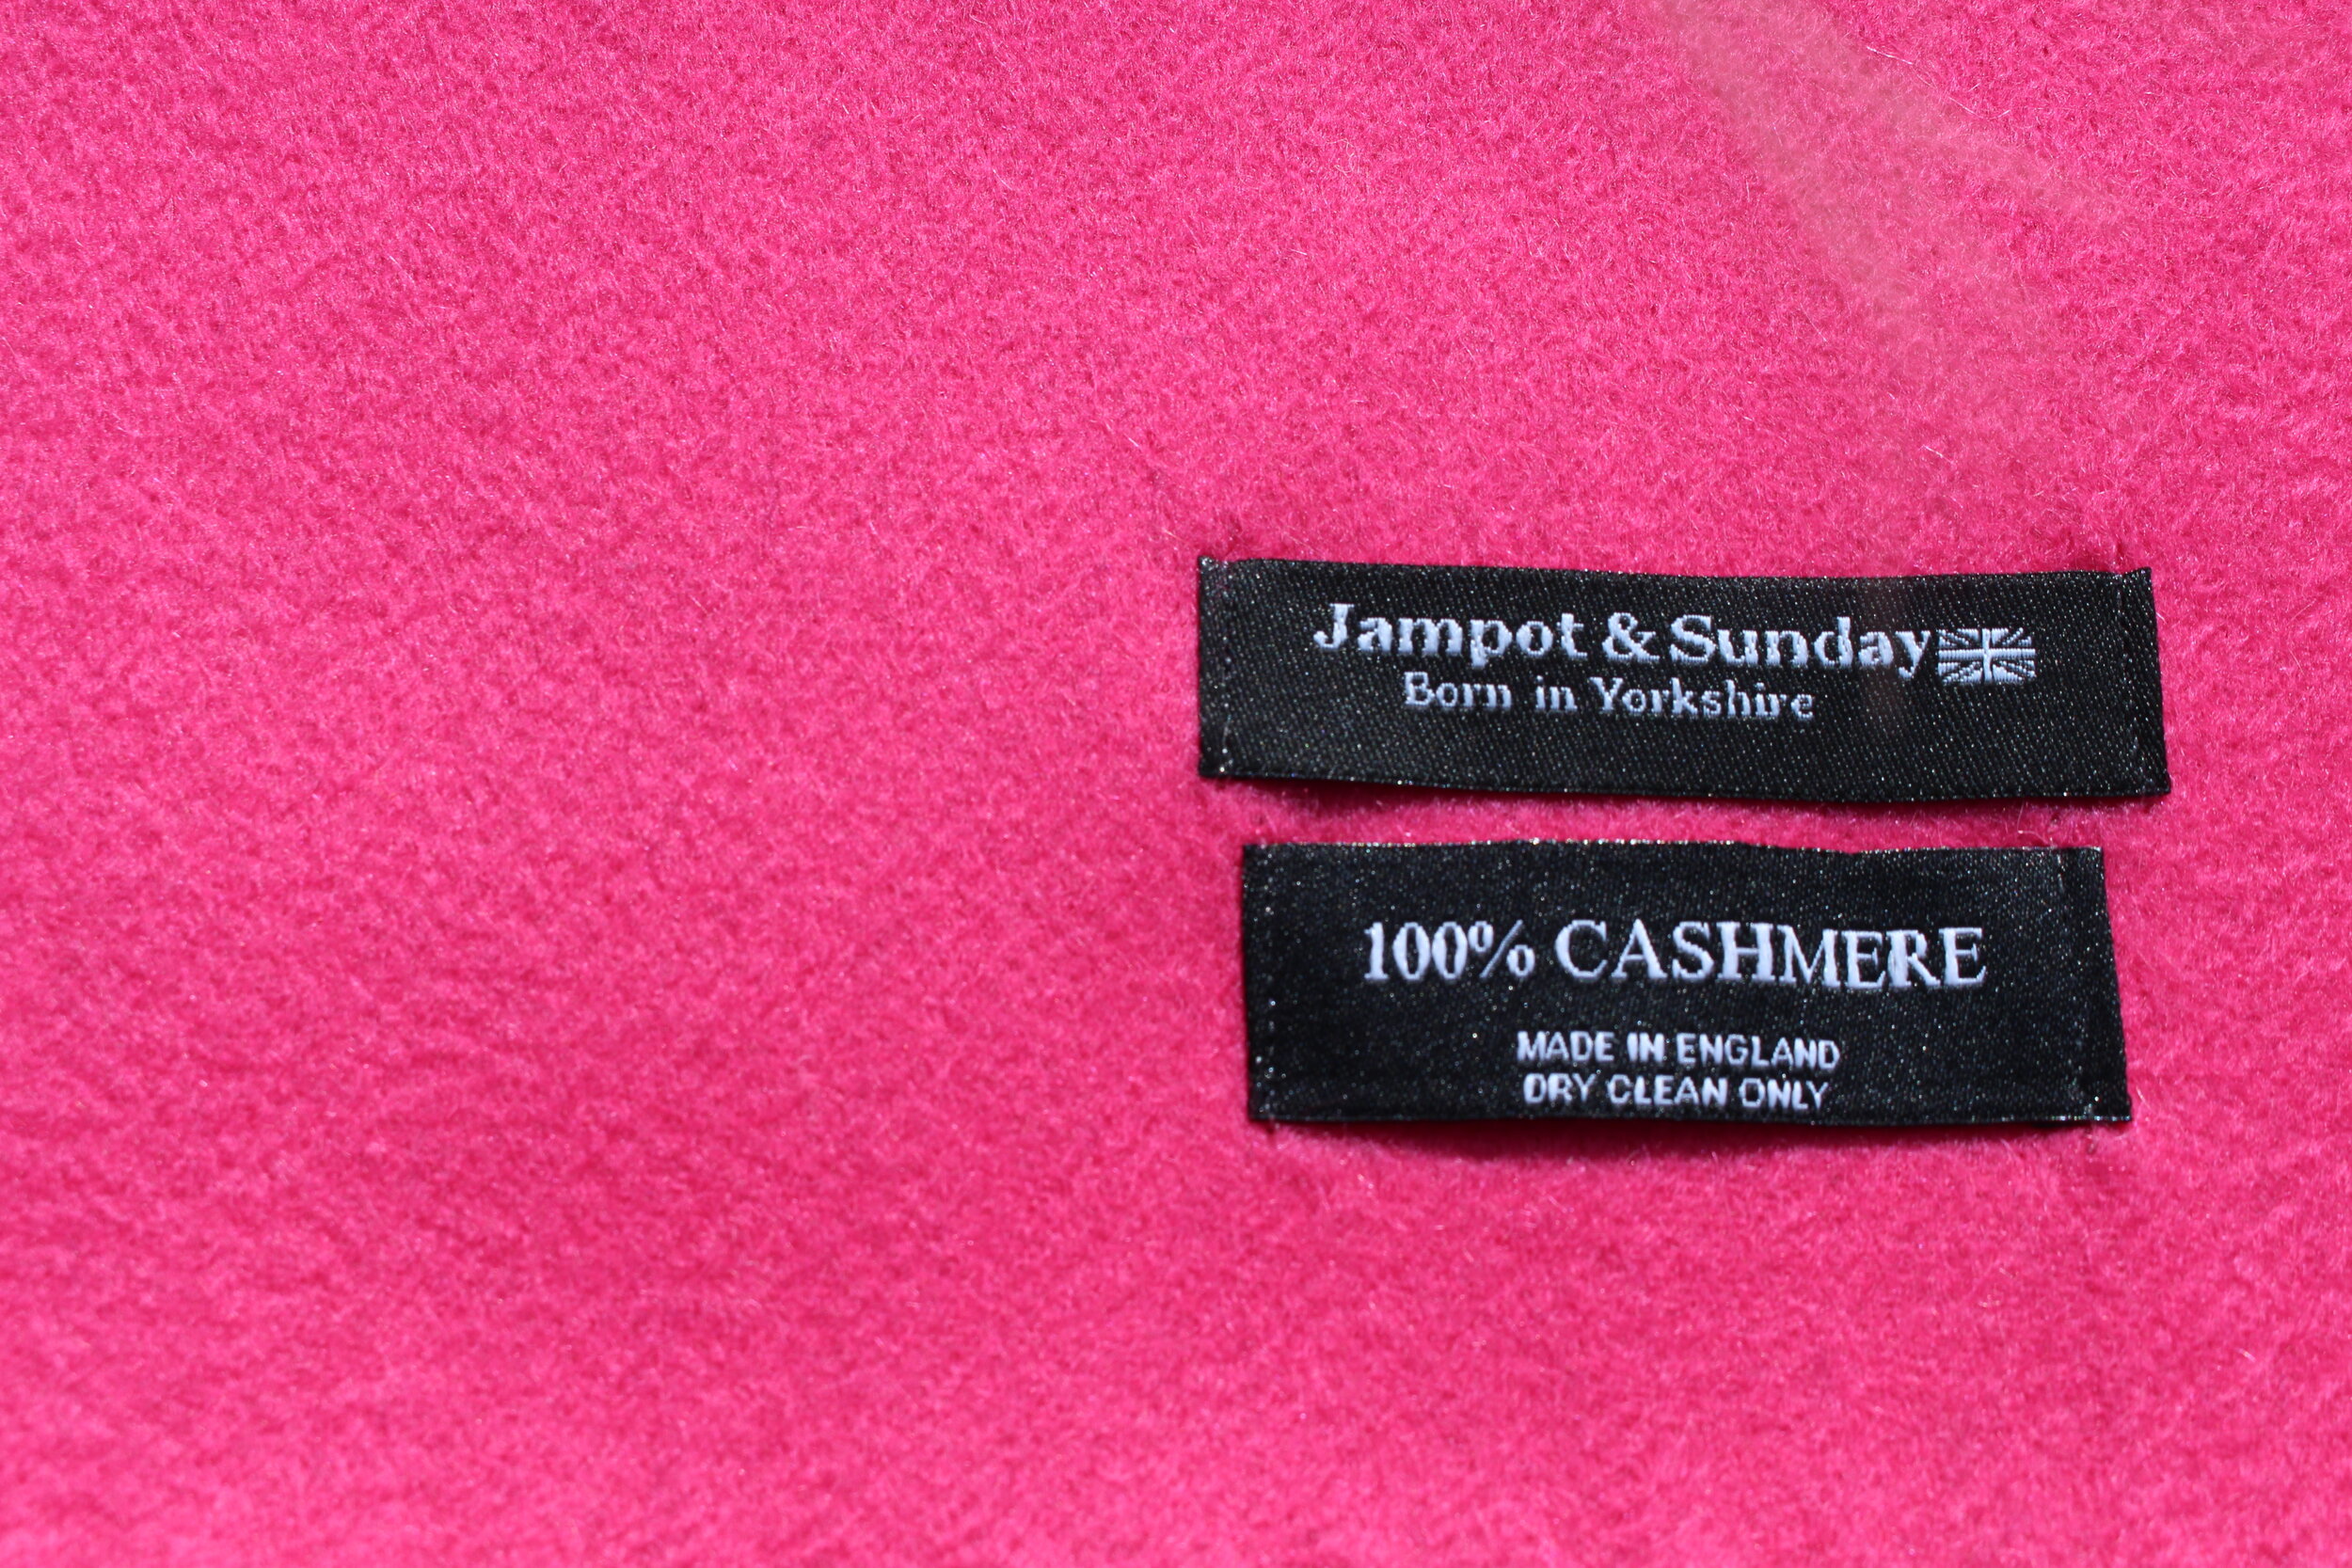 Our Shop — Jampot & Sunday